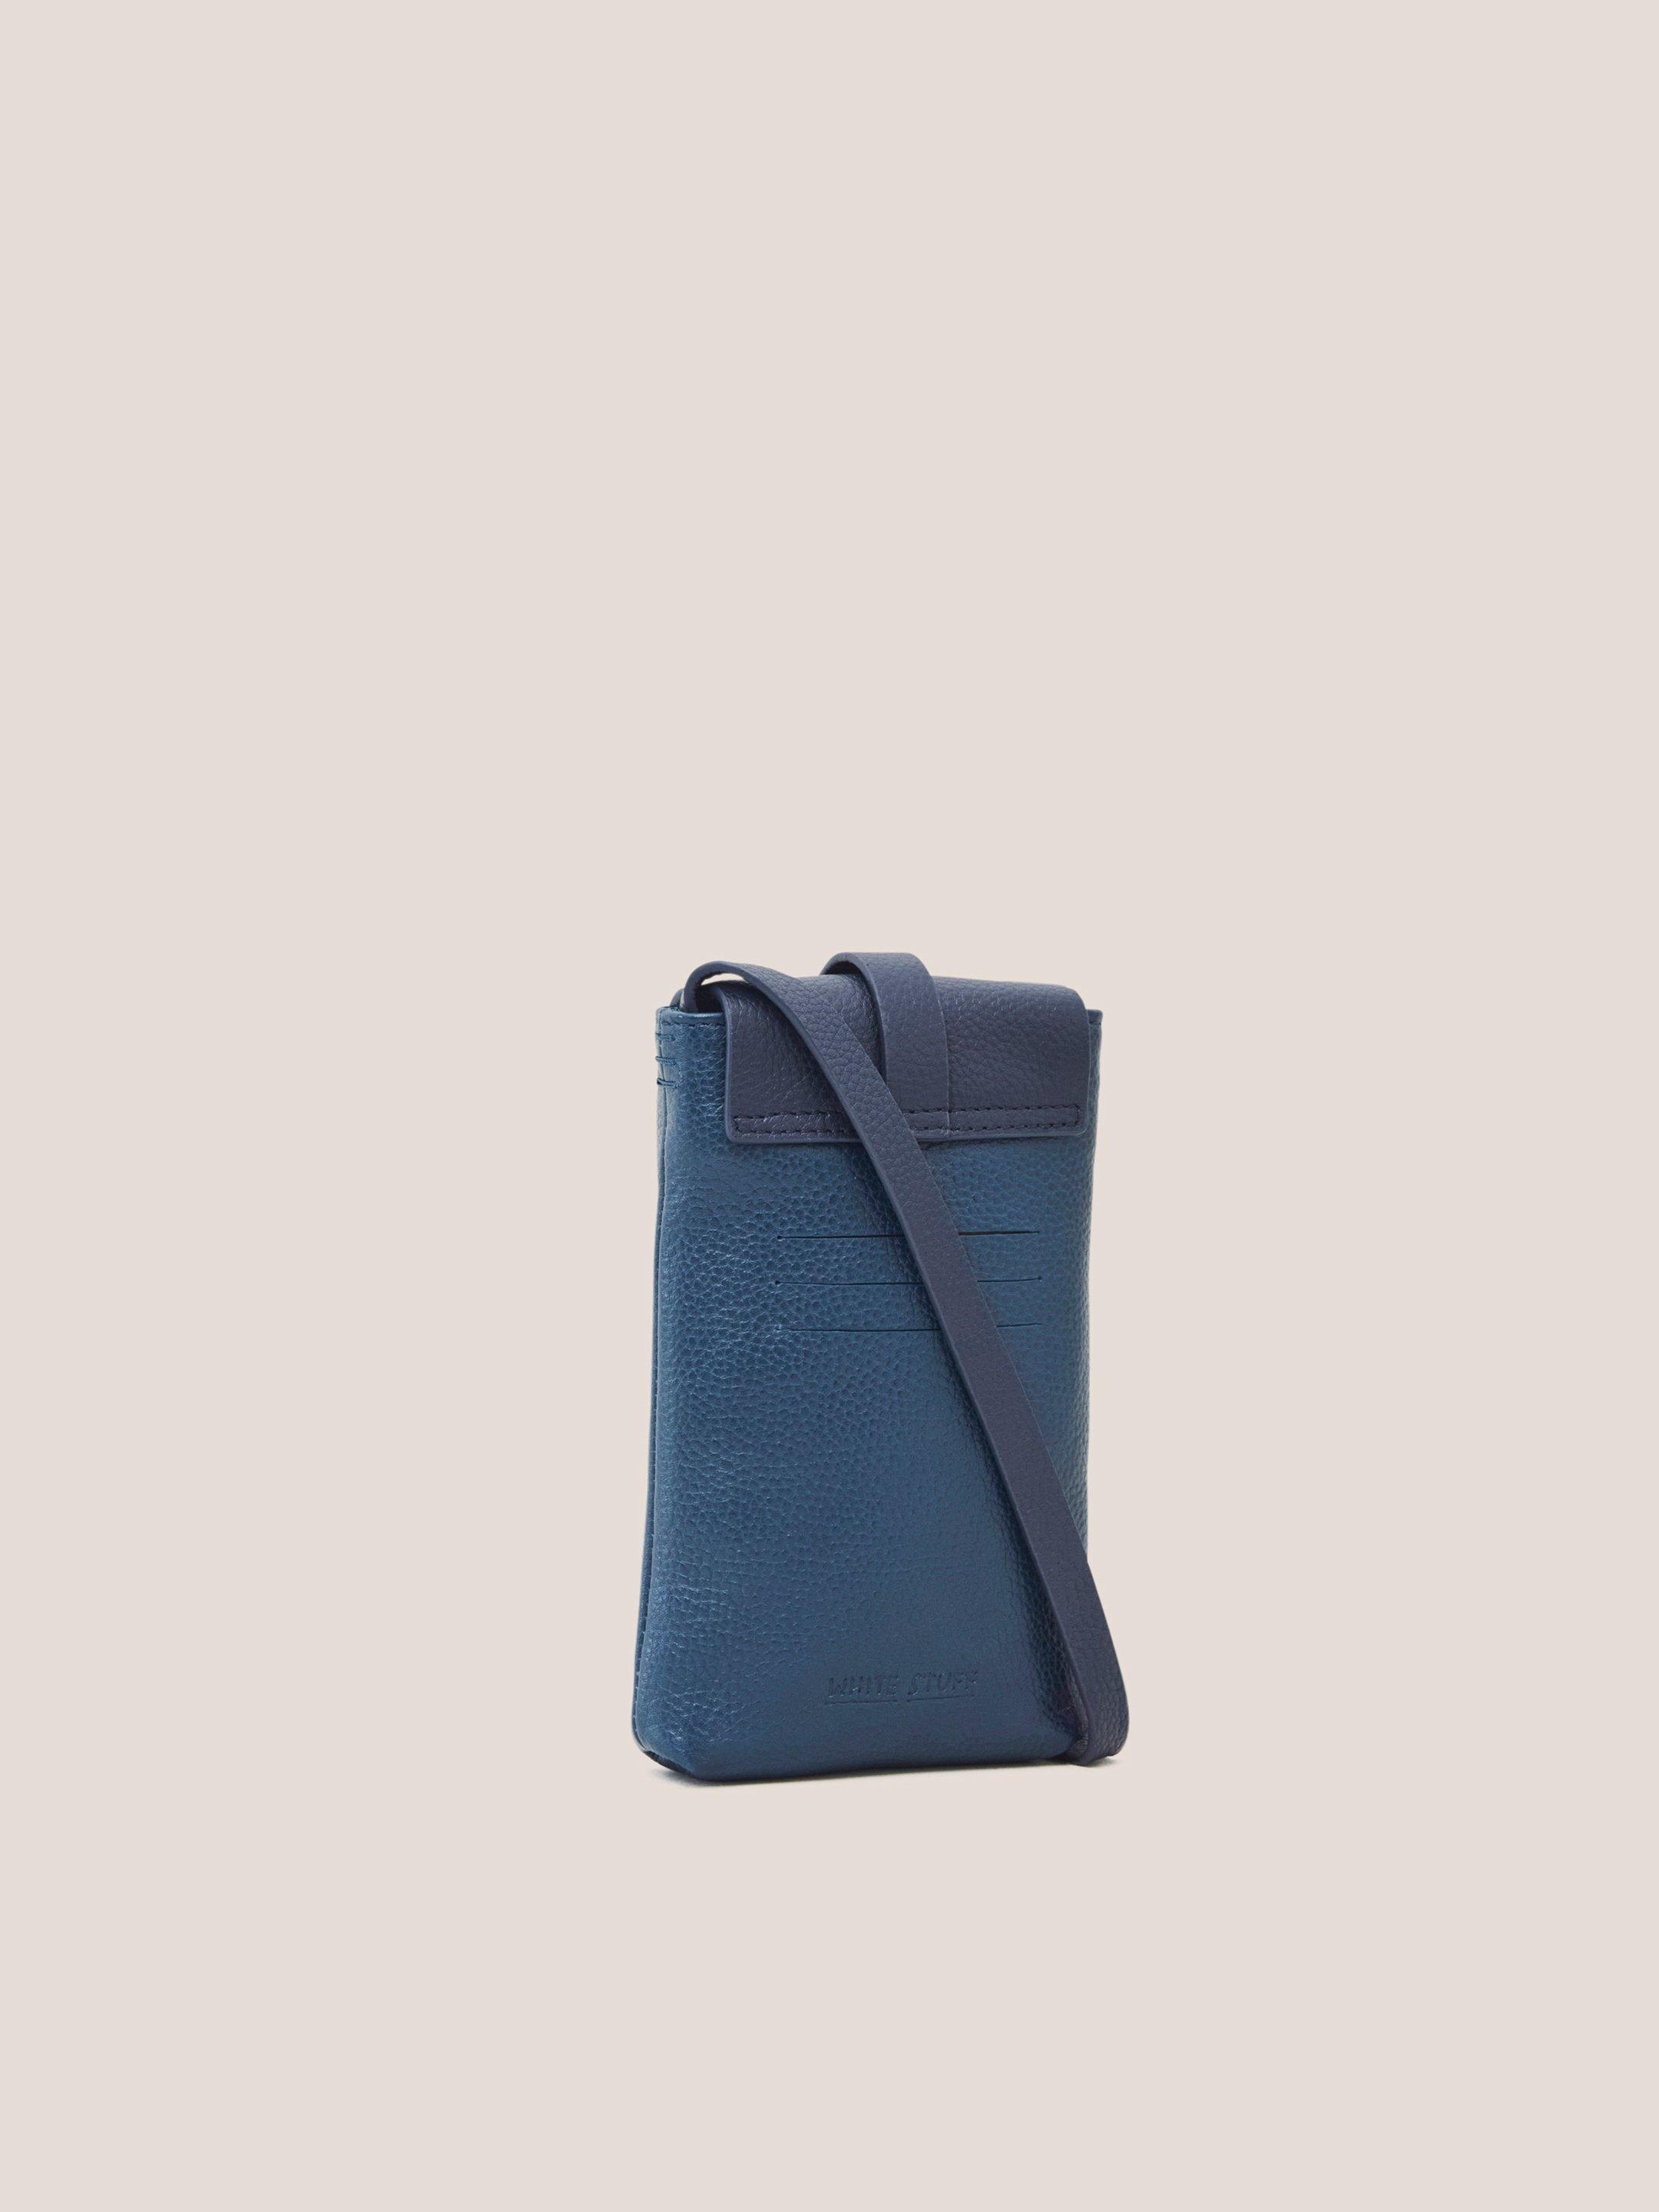 Clara Buckle Leather Phone Bag in DARK NAVY - FLAT BACK